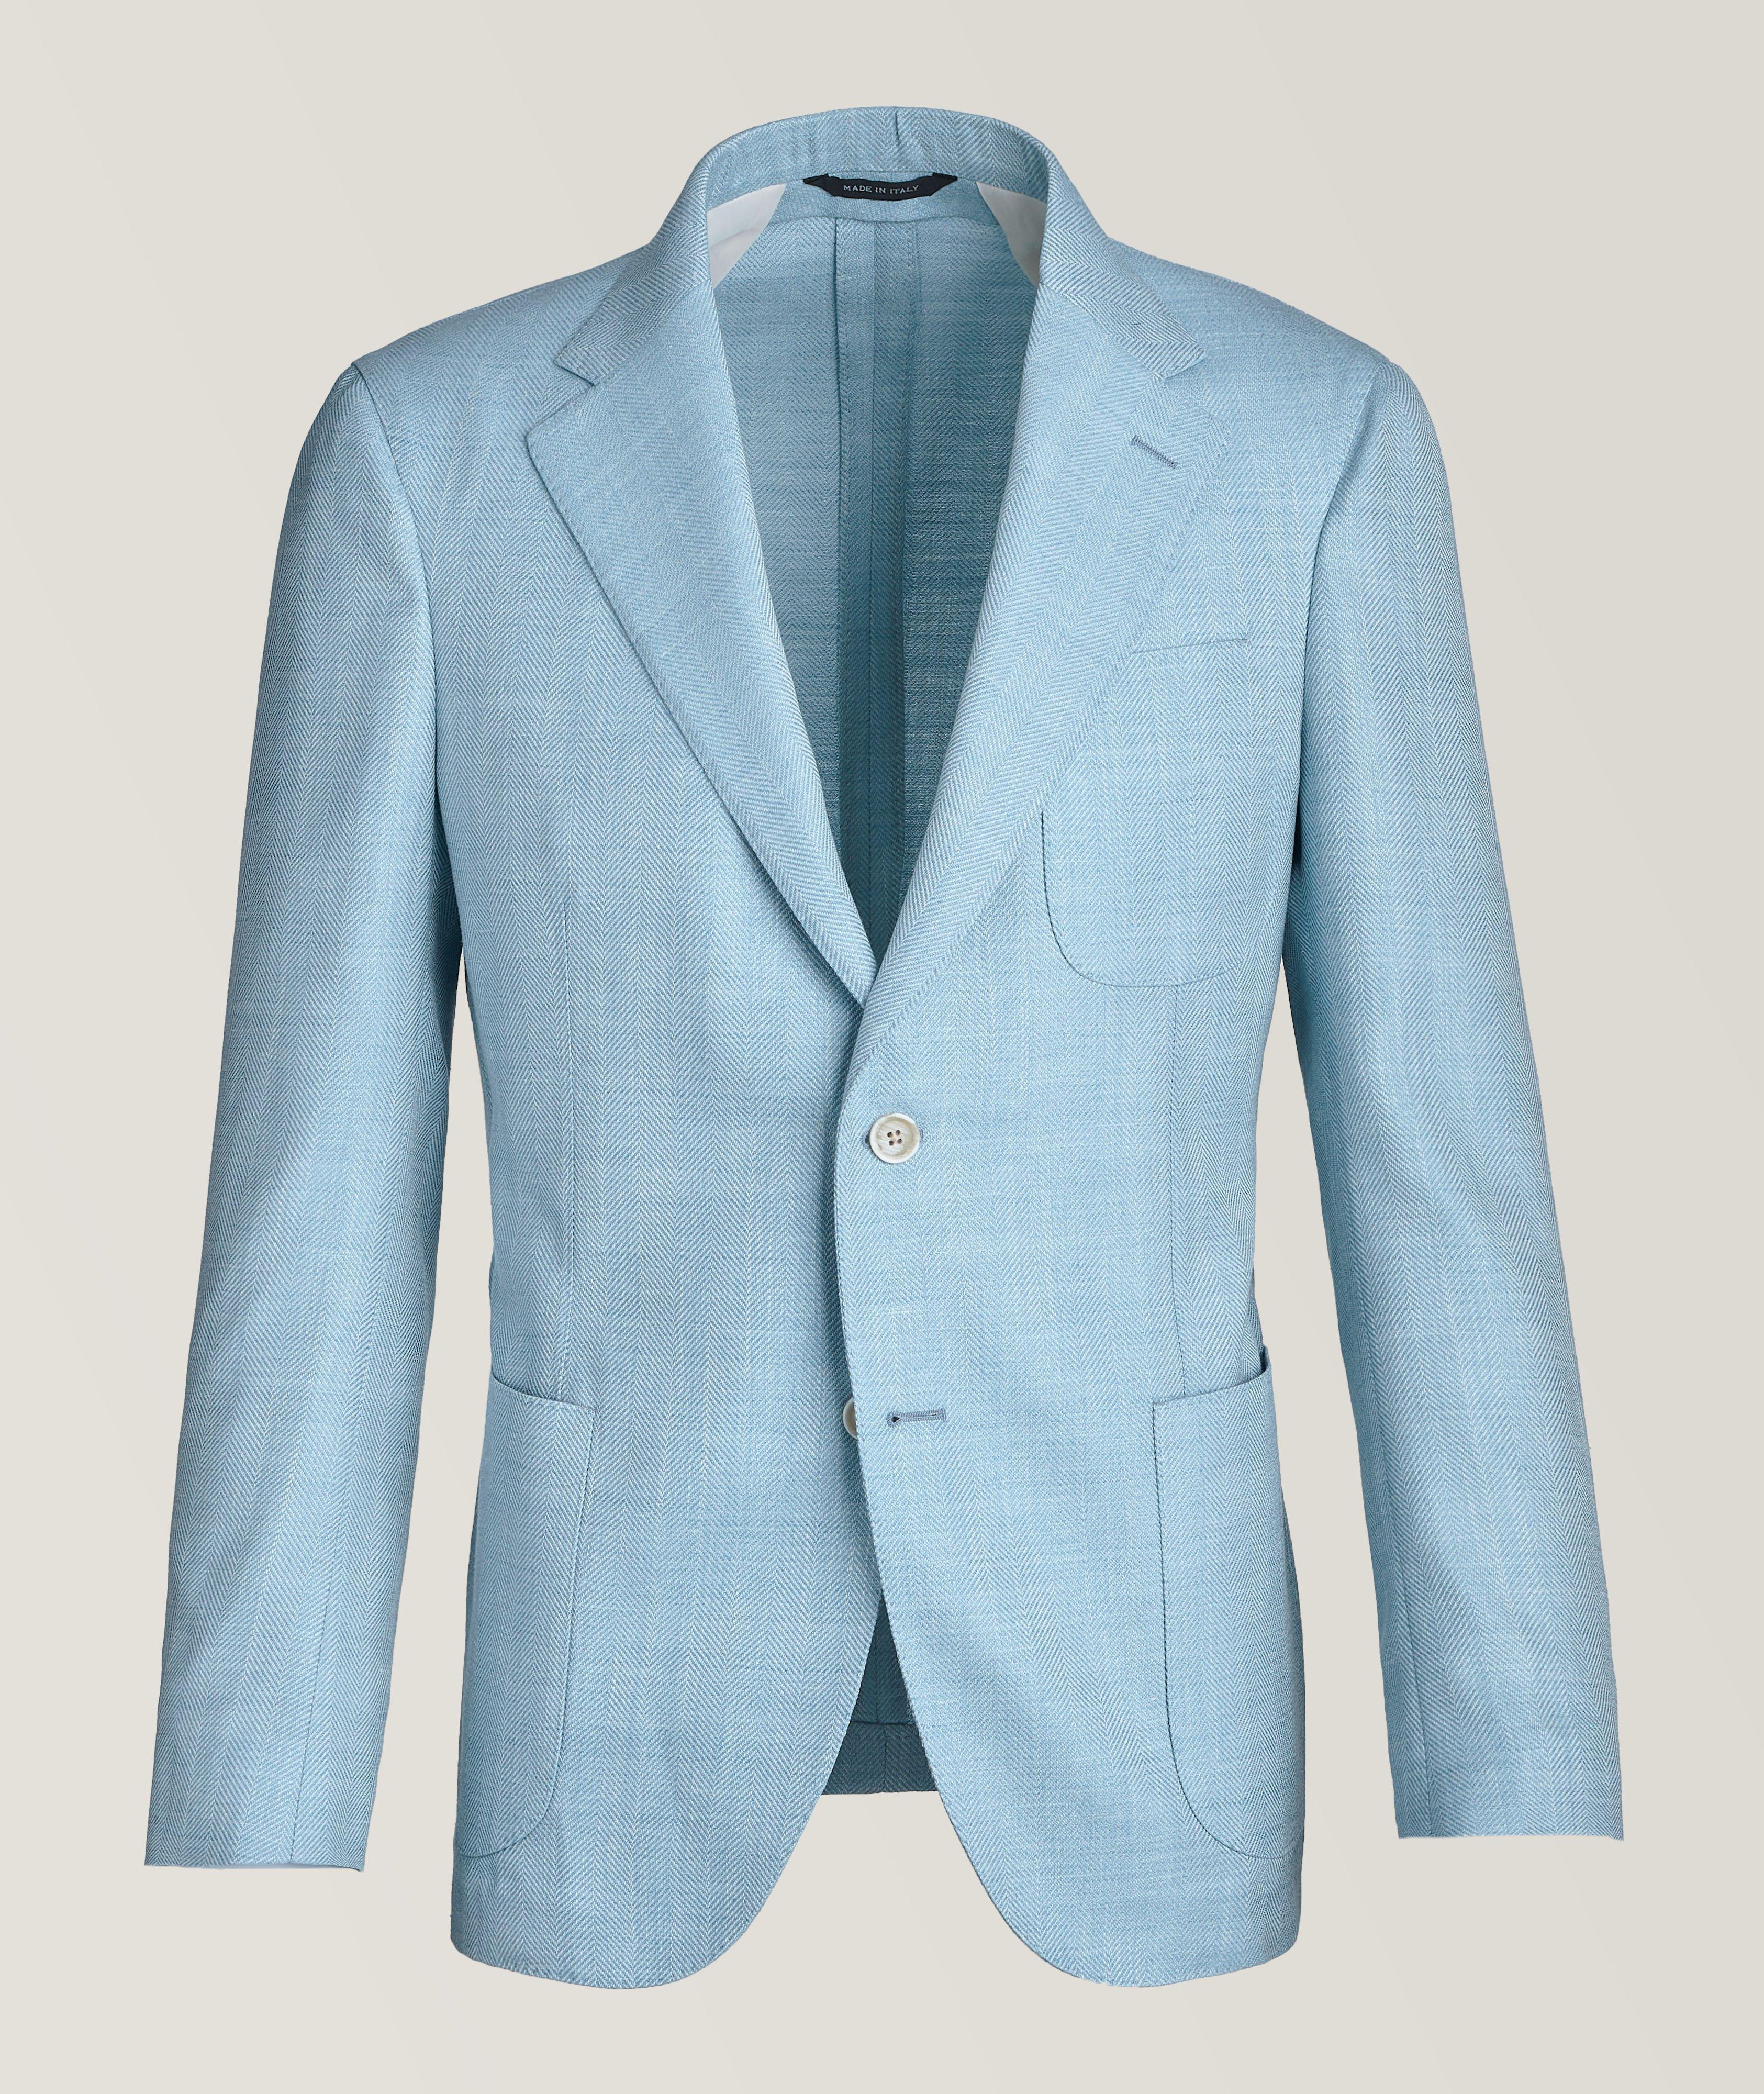 Tonal Herringbone Wool, Silk & Linen Sport jacket image 0